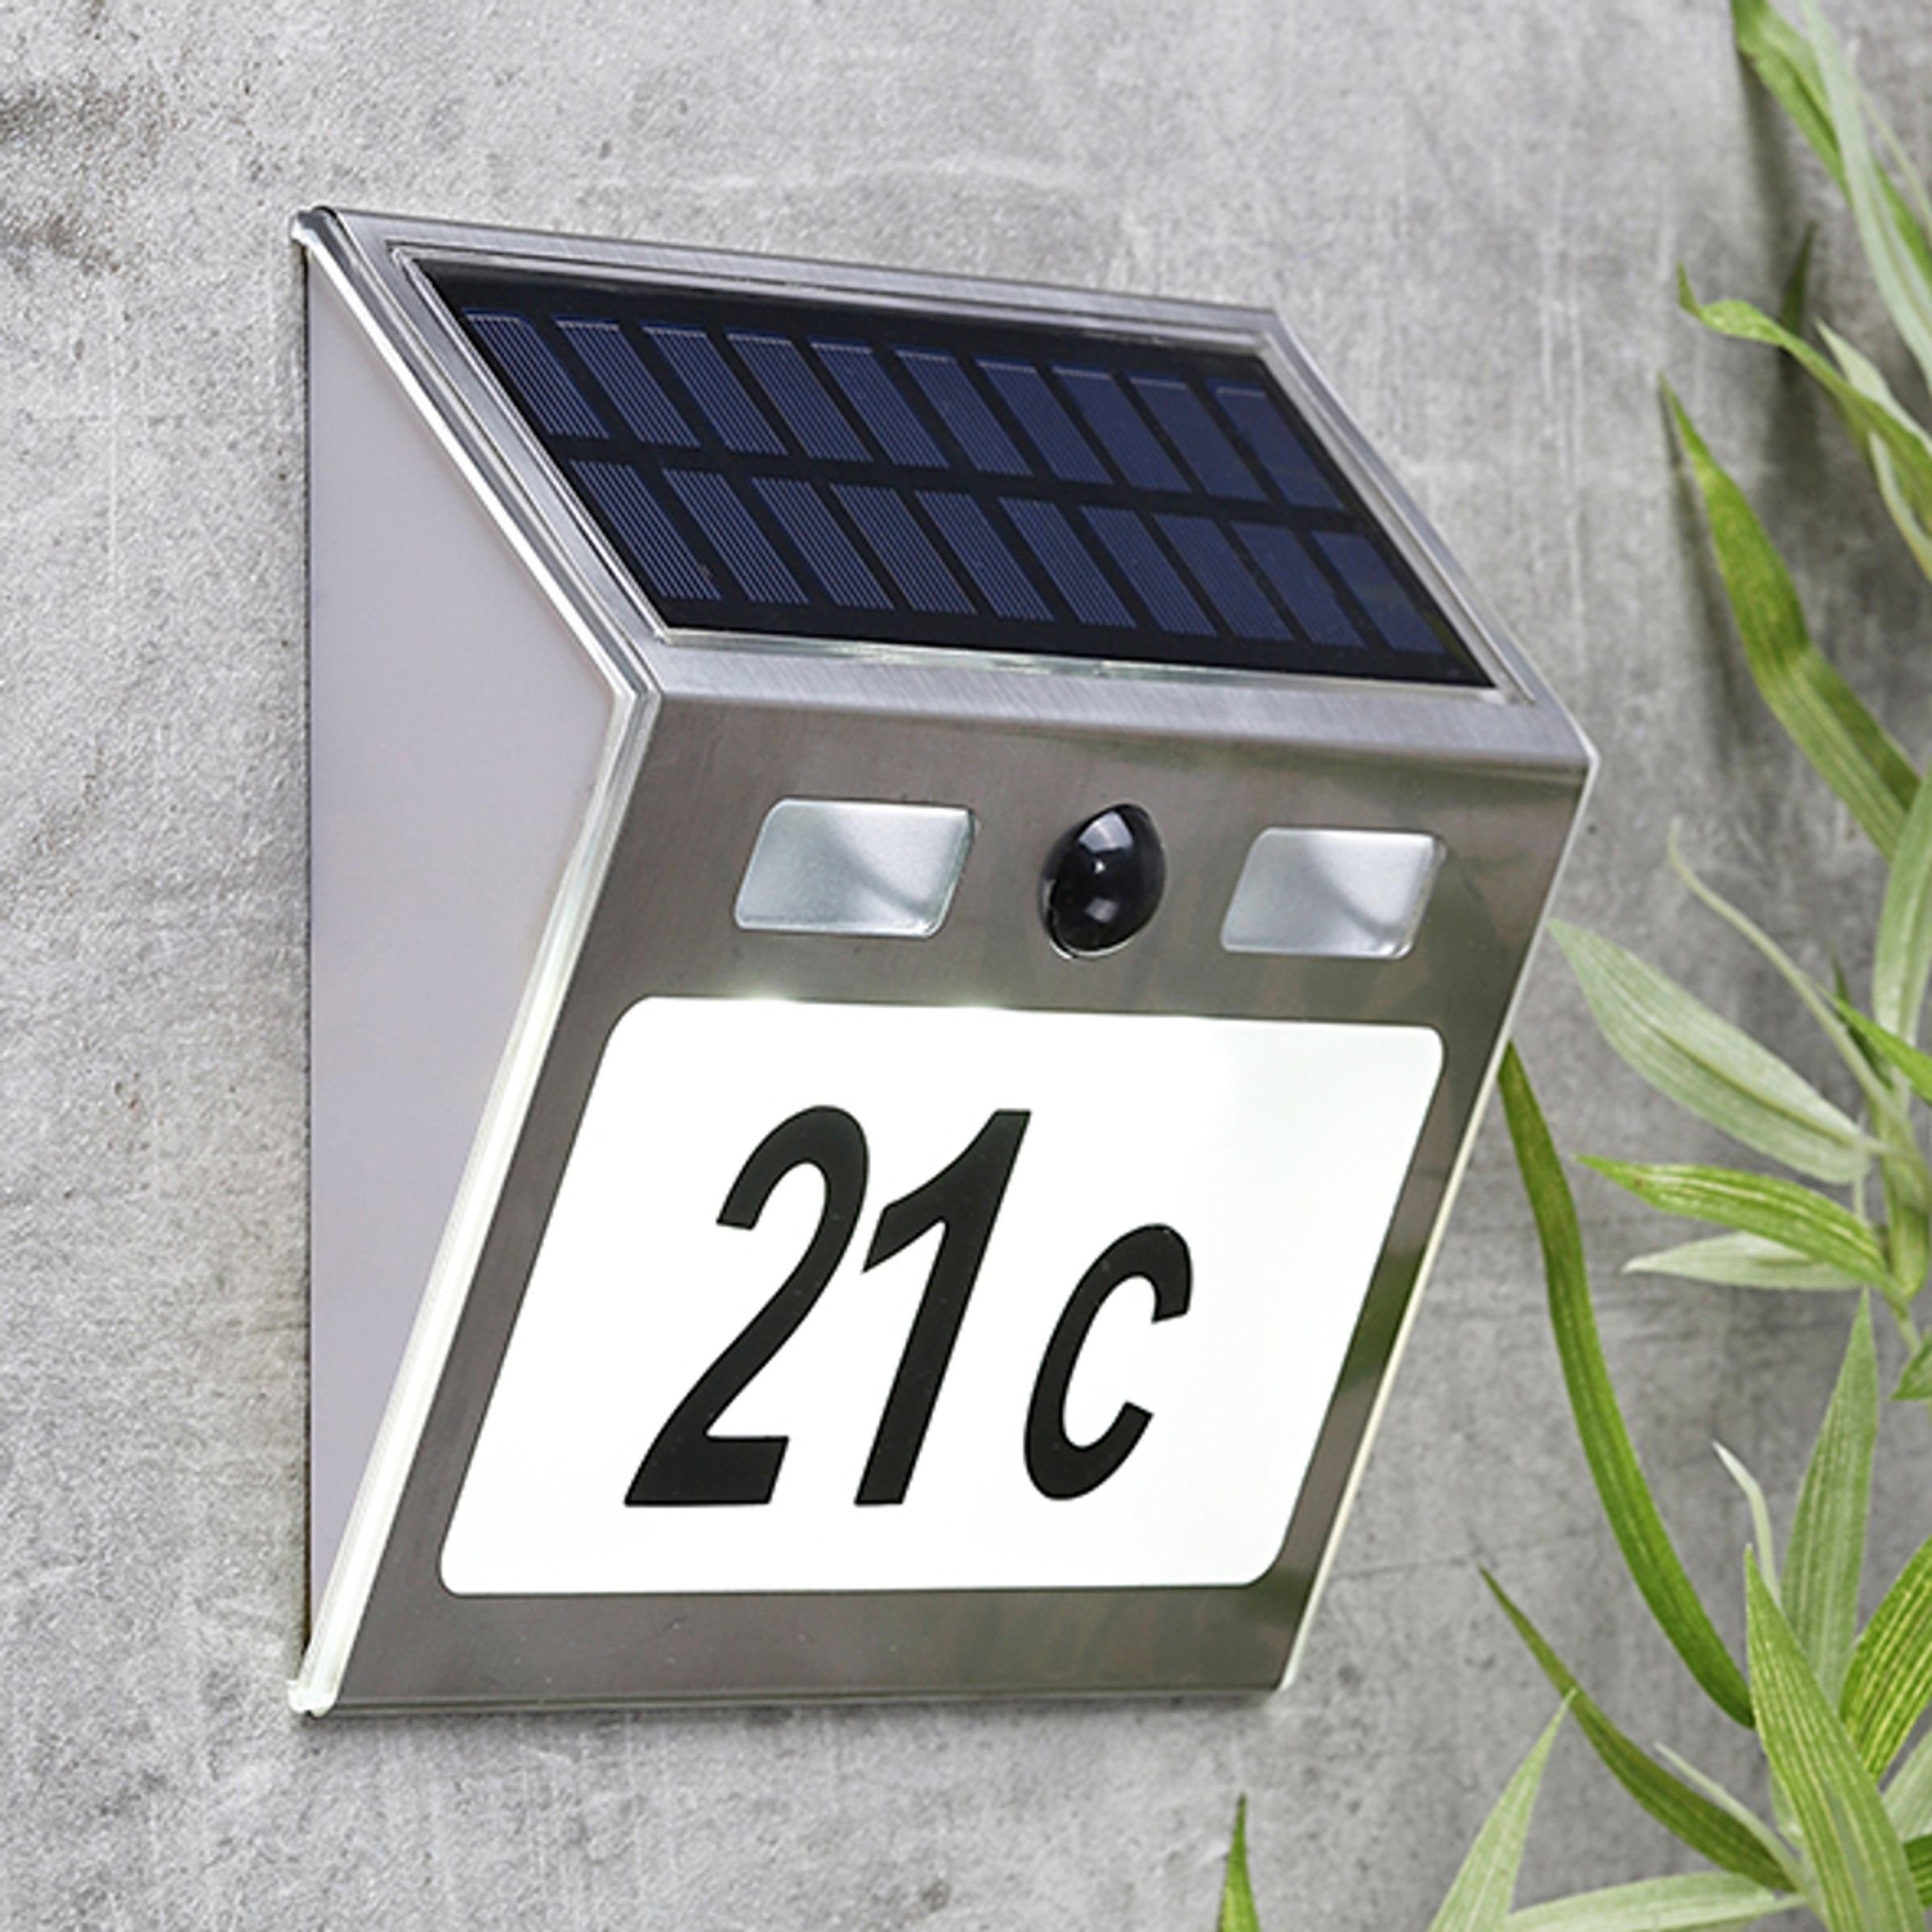 Hausnummer Solar Bewegungssensor Hausnummer Gravidus Nummer mit LED Bewegungsmelder